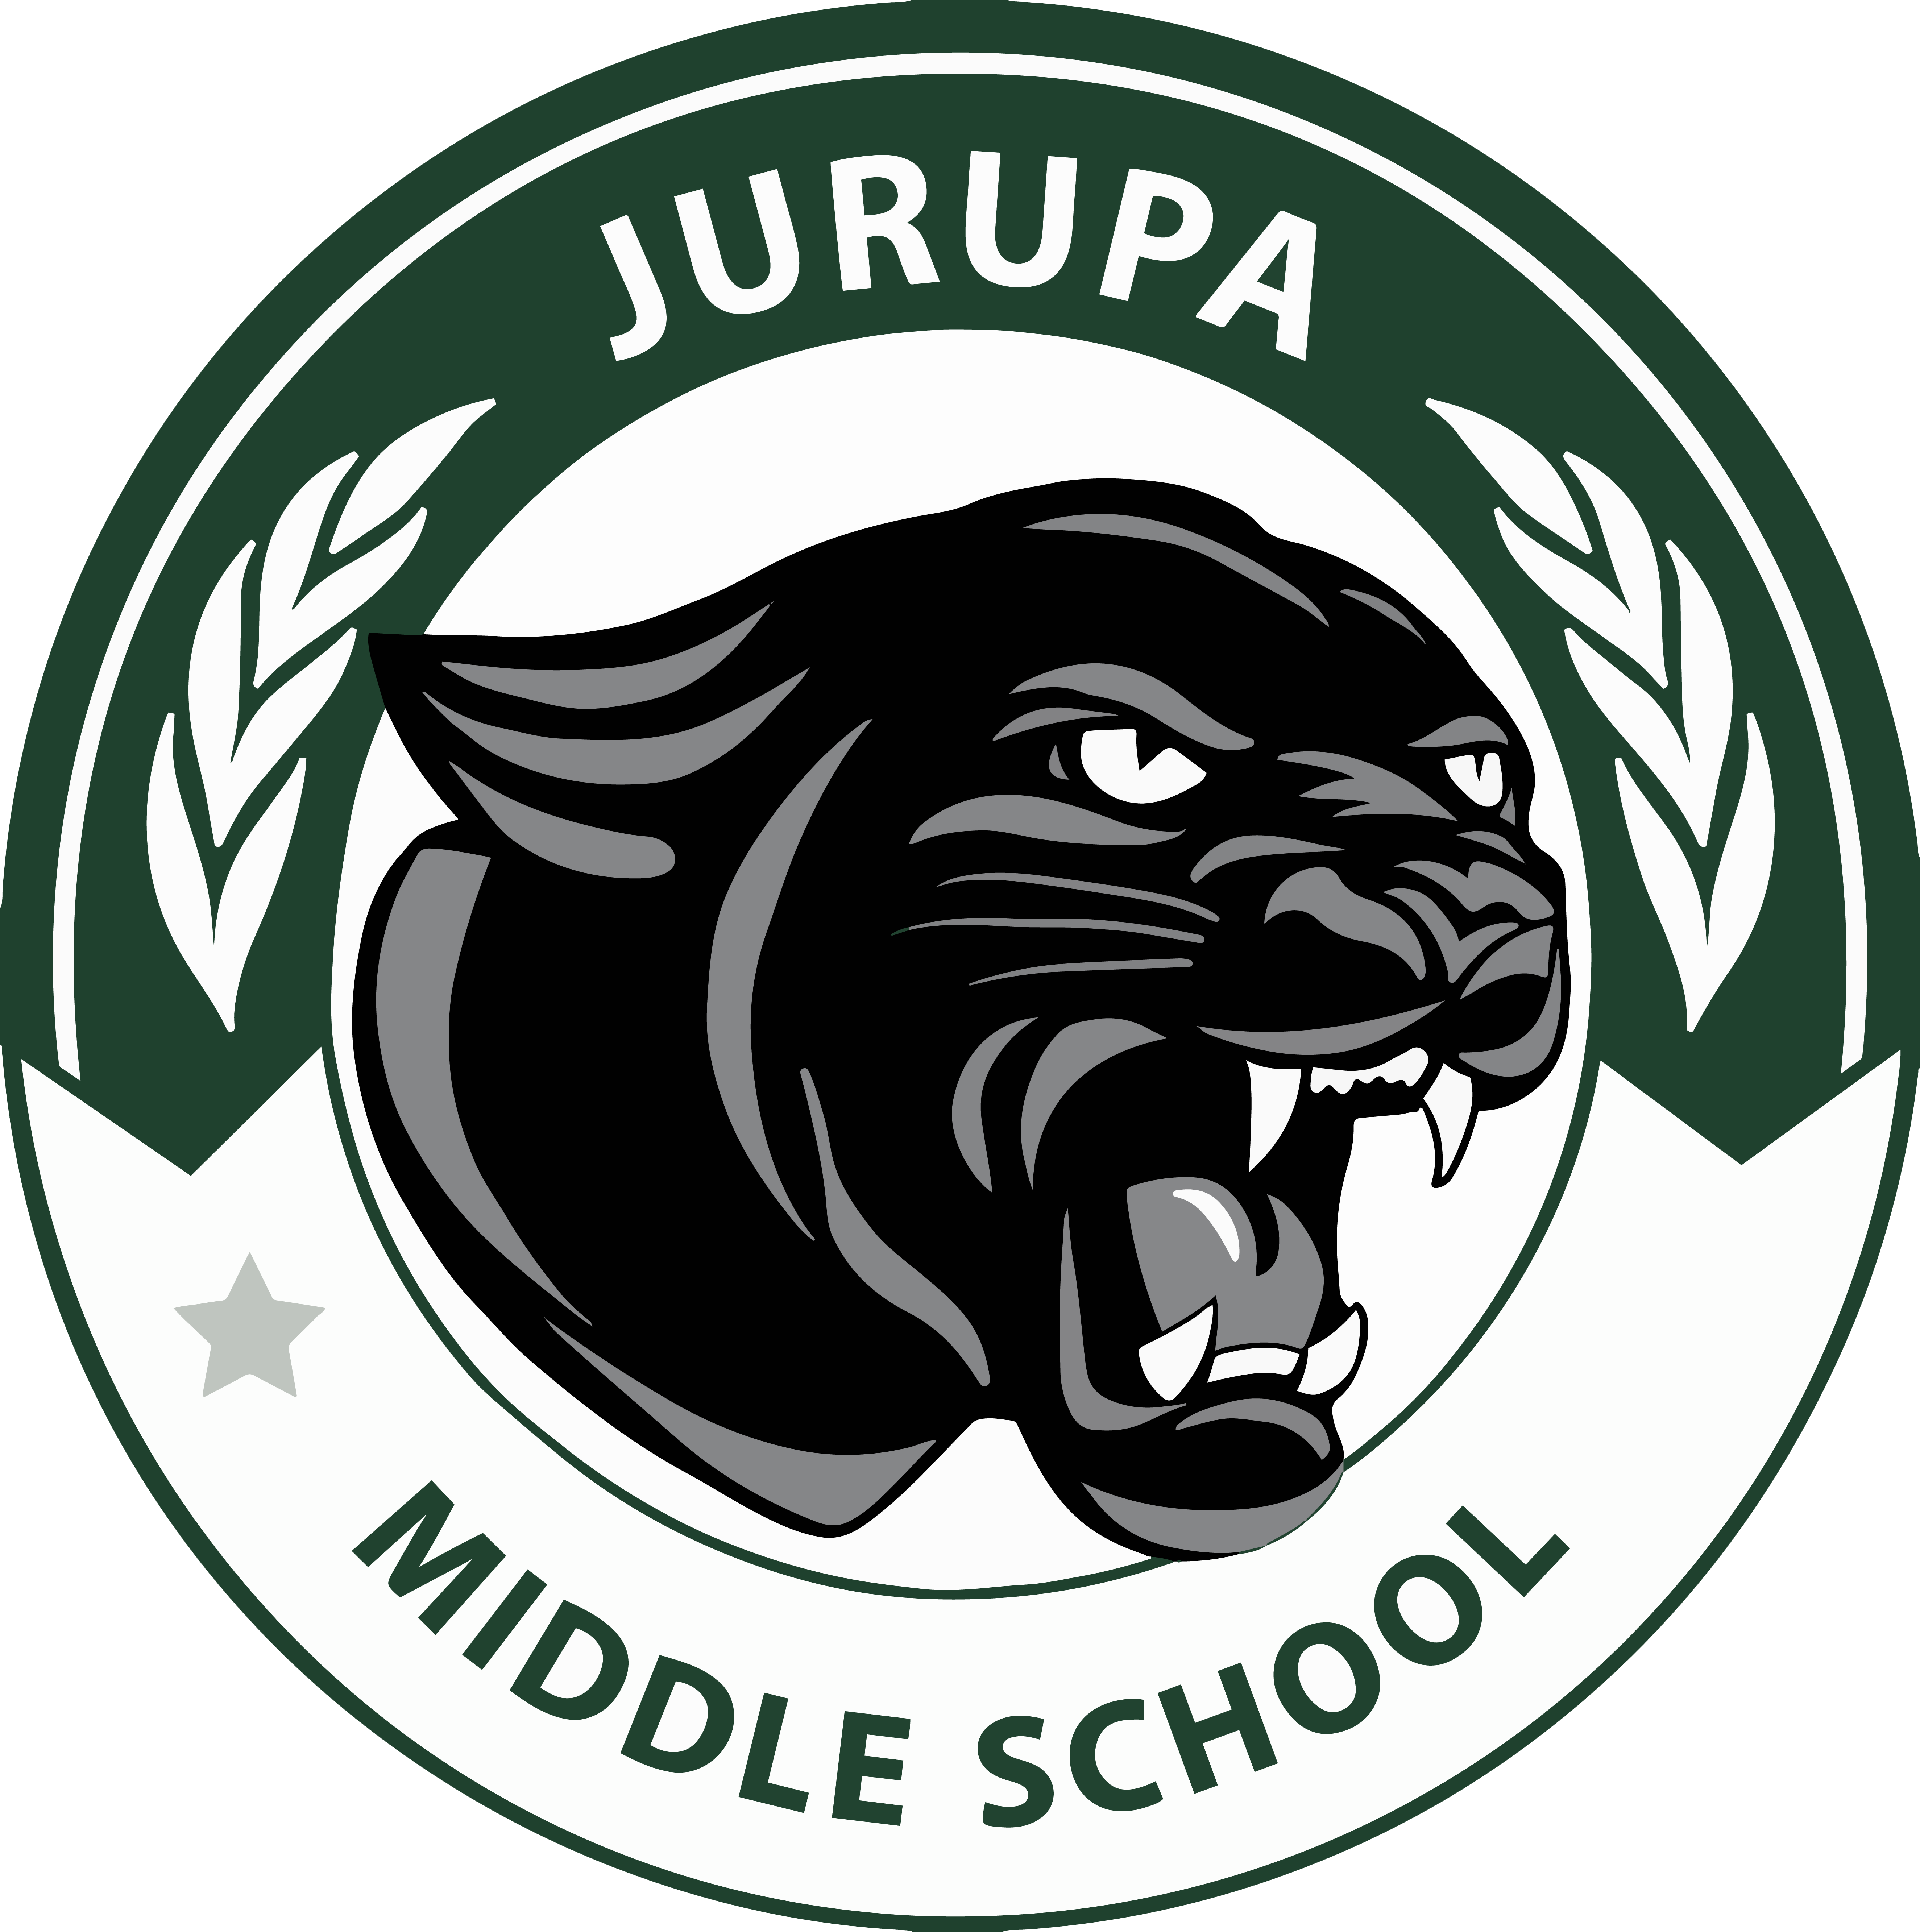 Jurupa Middle School.png